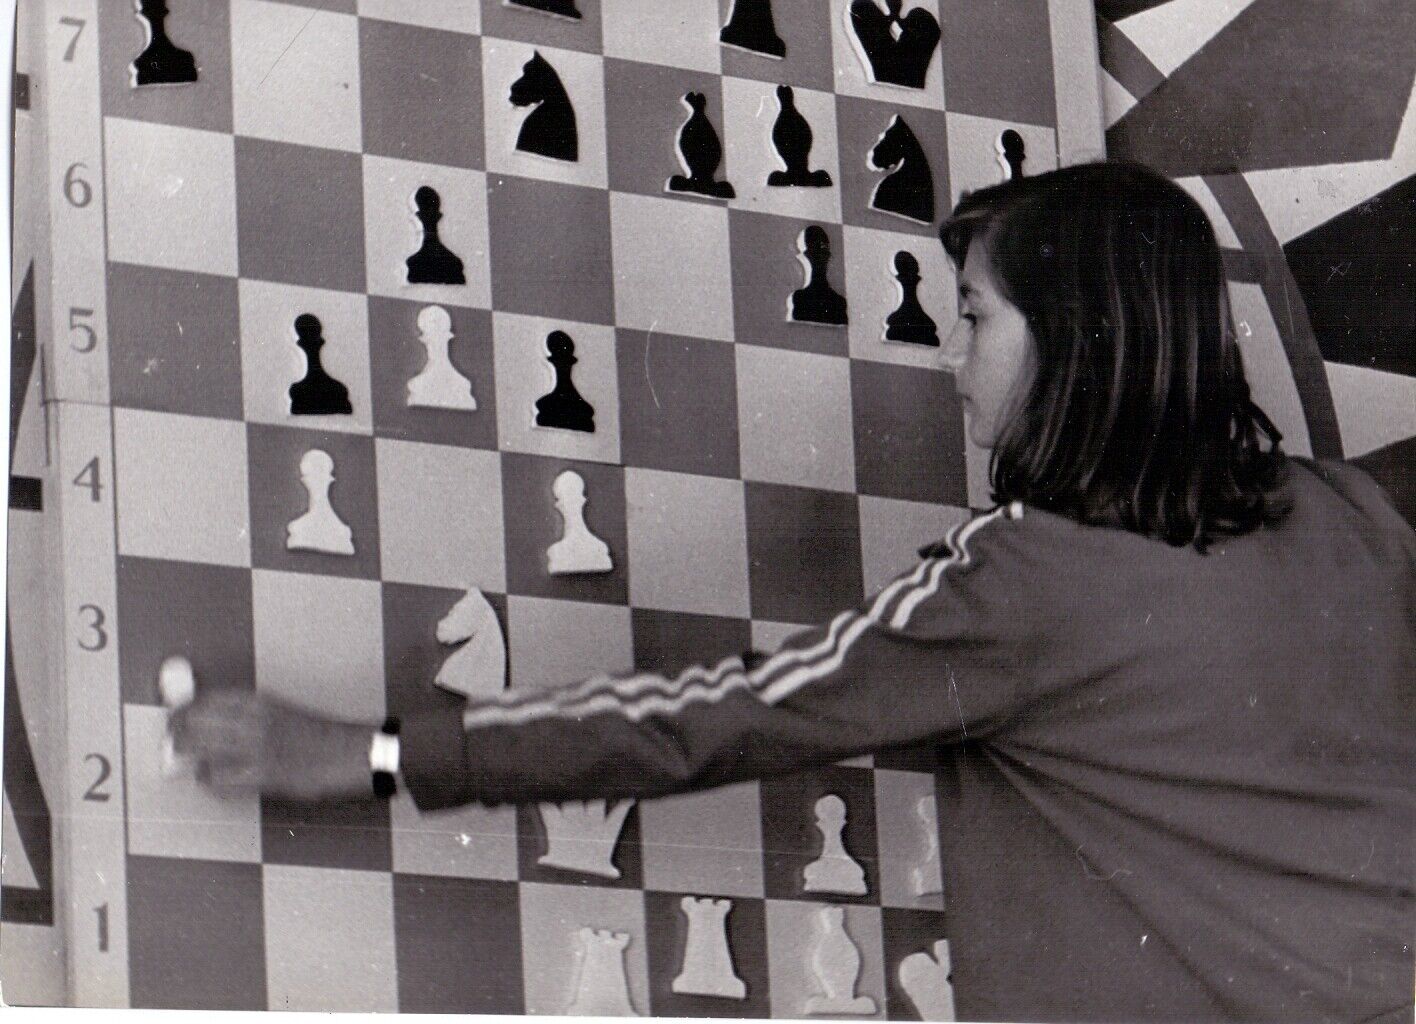 11759.Soviet Chess Photo: Children's chess 4 photos of 1970s by Dubeykovsky